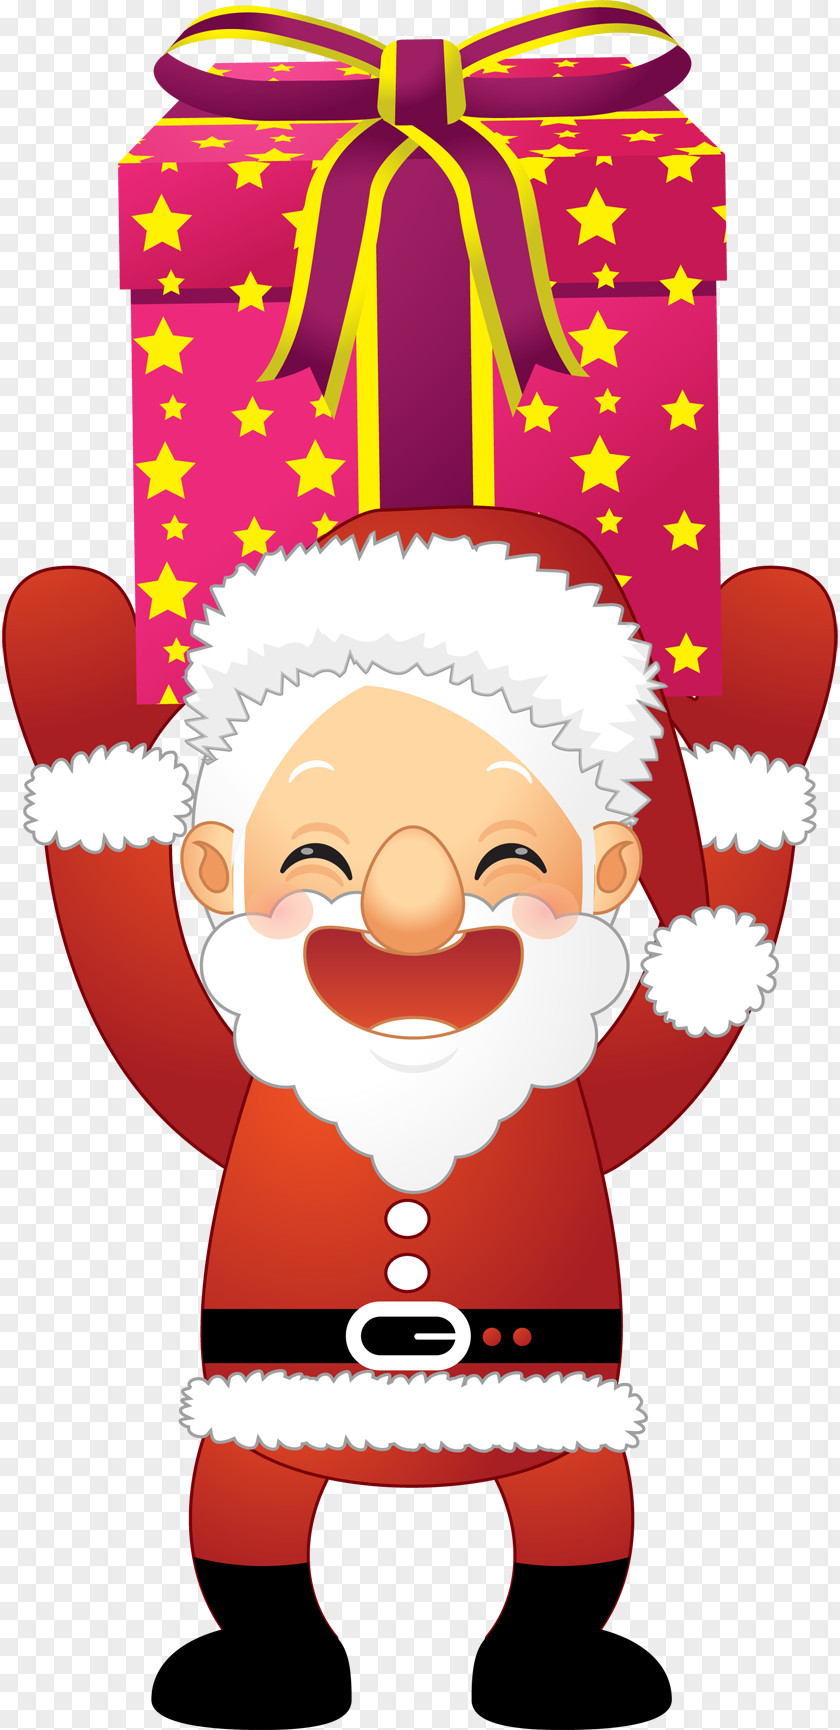 Send Gift Santa Claus Christmas Ornament Clip Art PNG